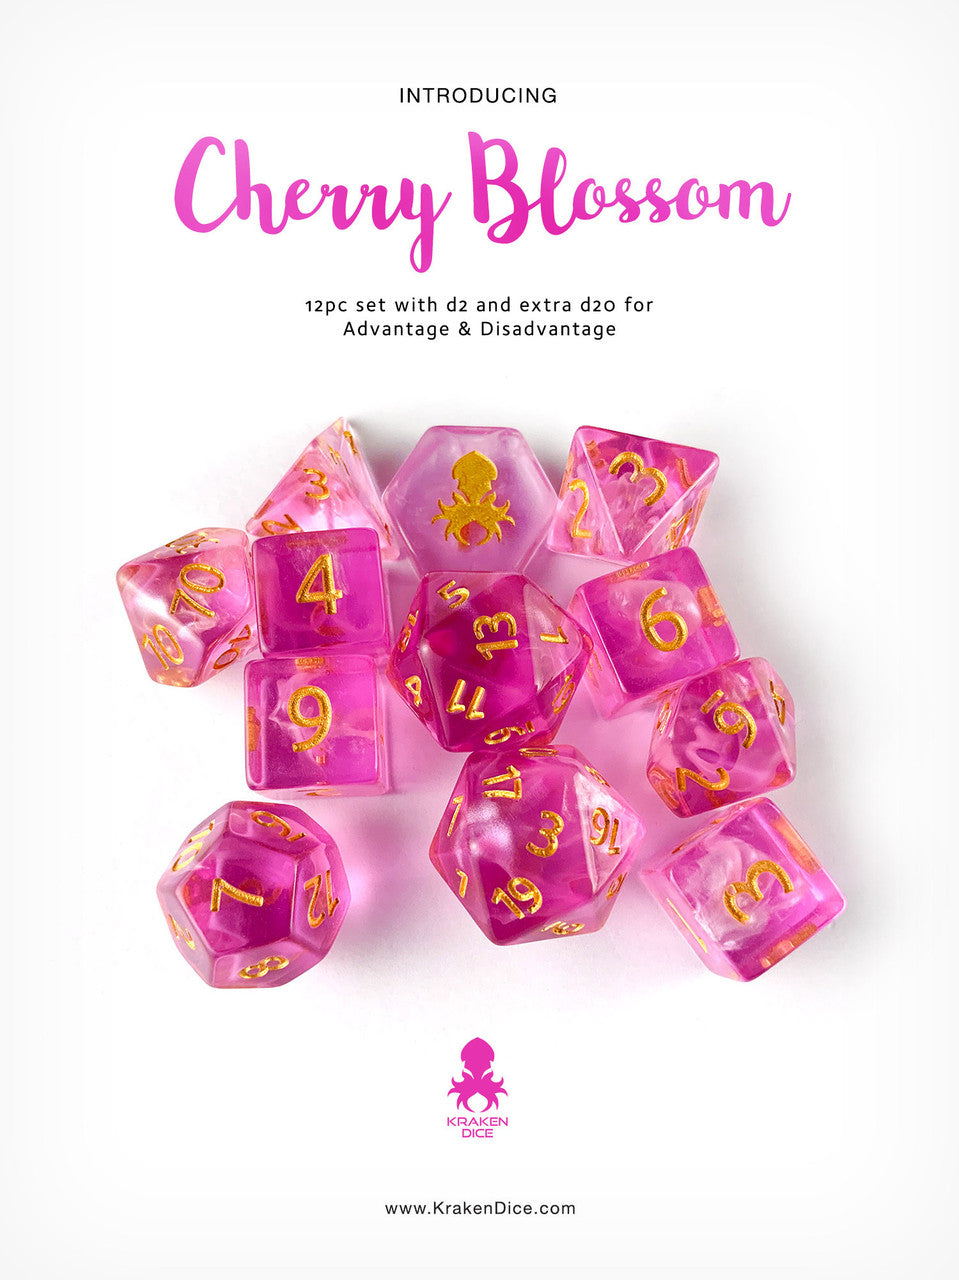 Cherry Blossom 14pc DnD Dice Set With Kraken Logo